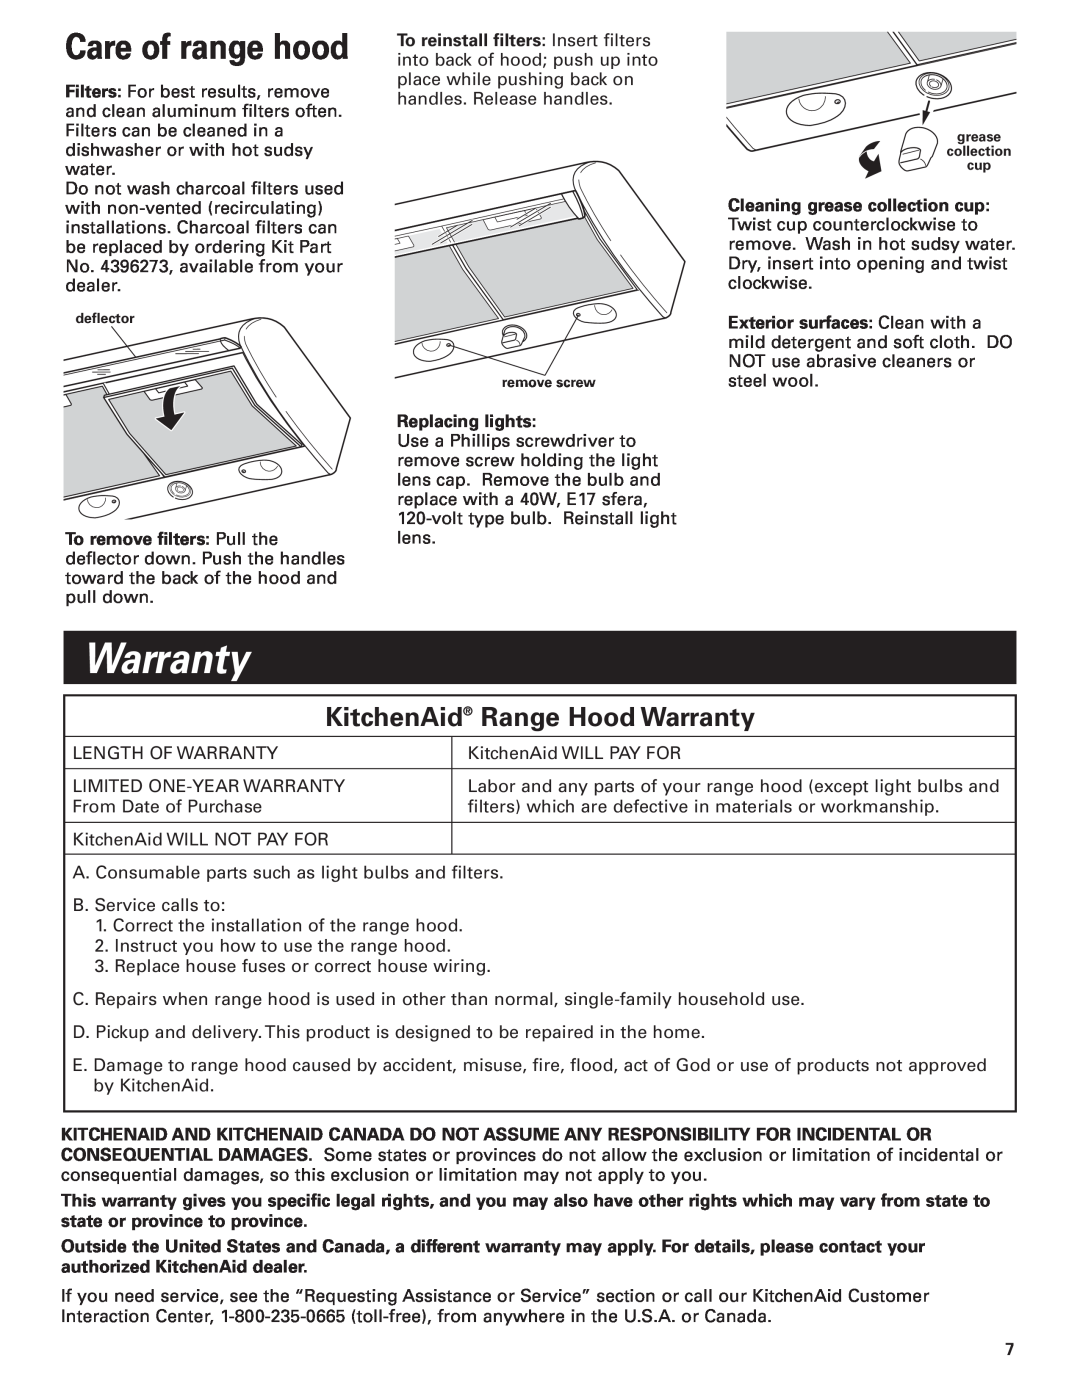 KitchenAid KHTU100 installation instructions Care of range hood, KitchenAid Range Hood Warranty 